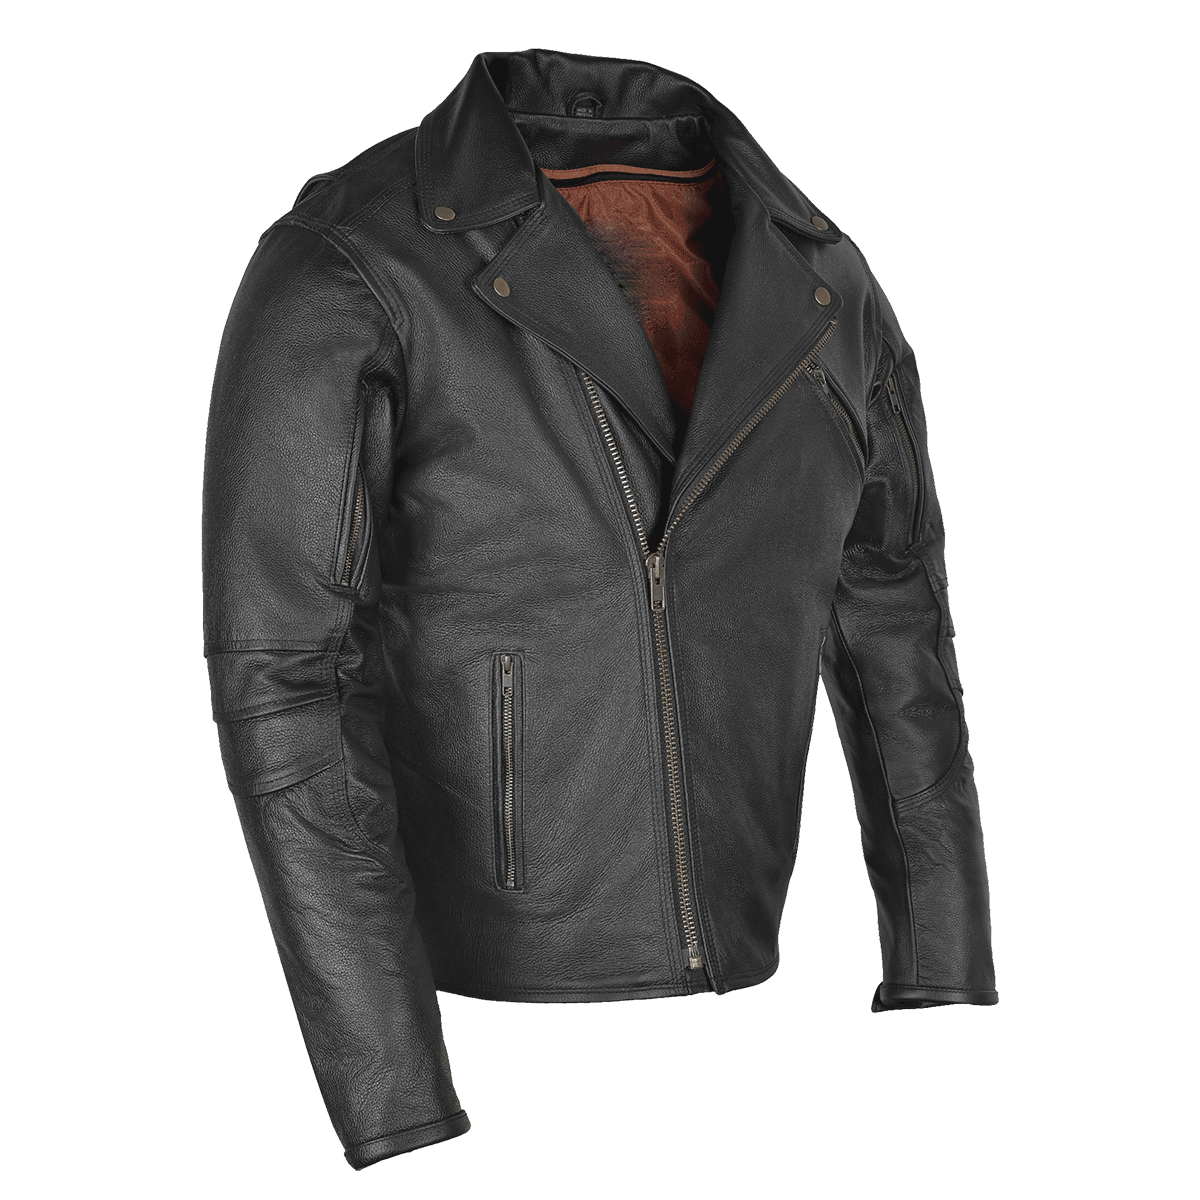 Premium Beltless Jacket With Dual Gun Pockets & Zip Out Liner wclapparel